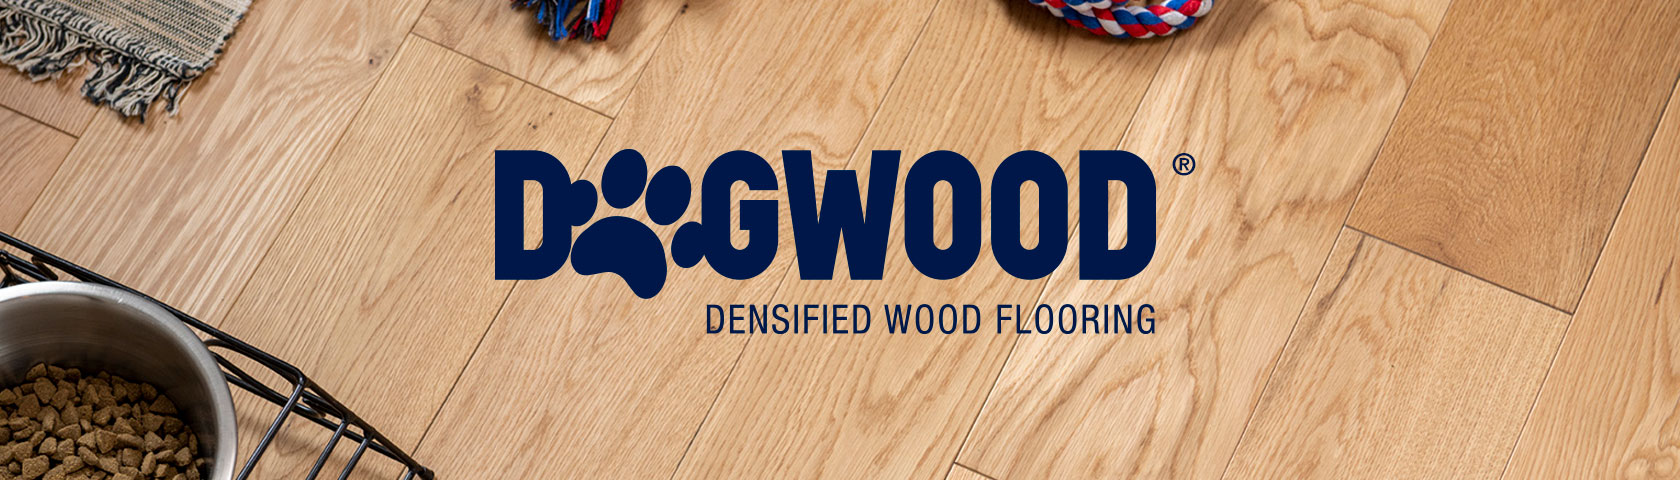 Bruce Dogwood Densified Wood Flooring Hero Image